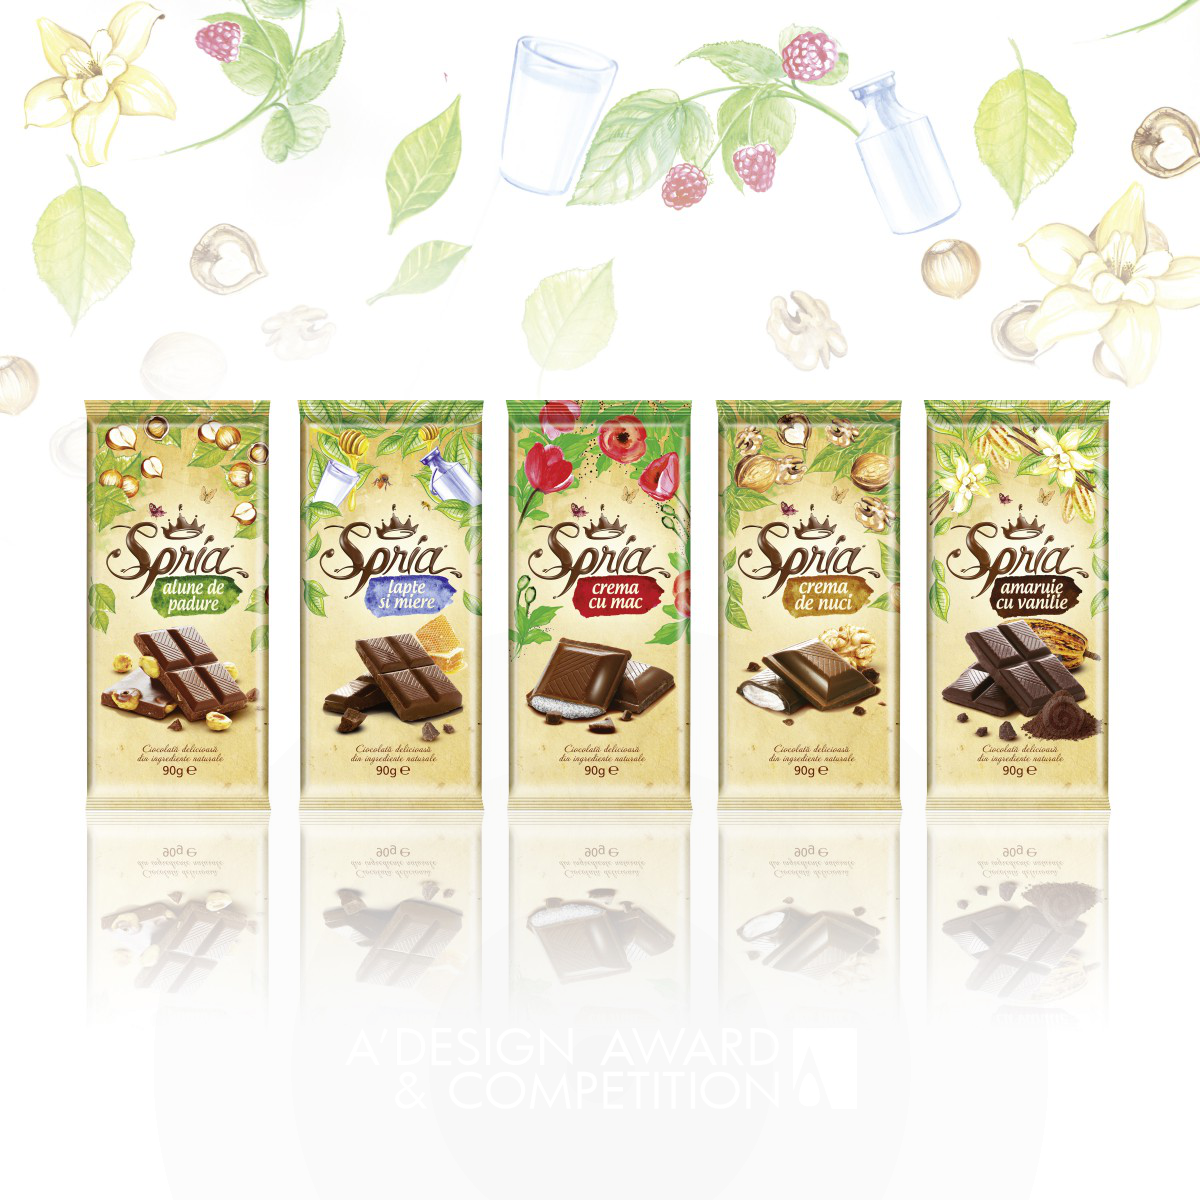 Spria Chocolate <b>Range of chocolate tablets